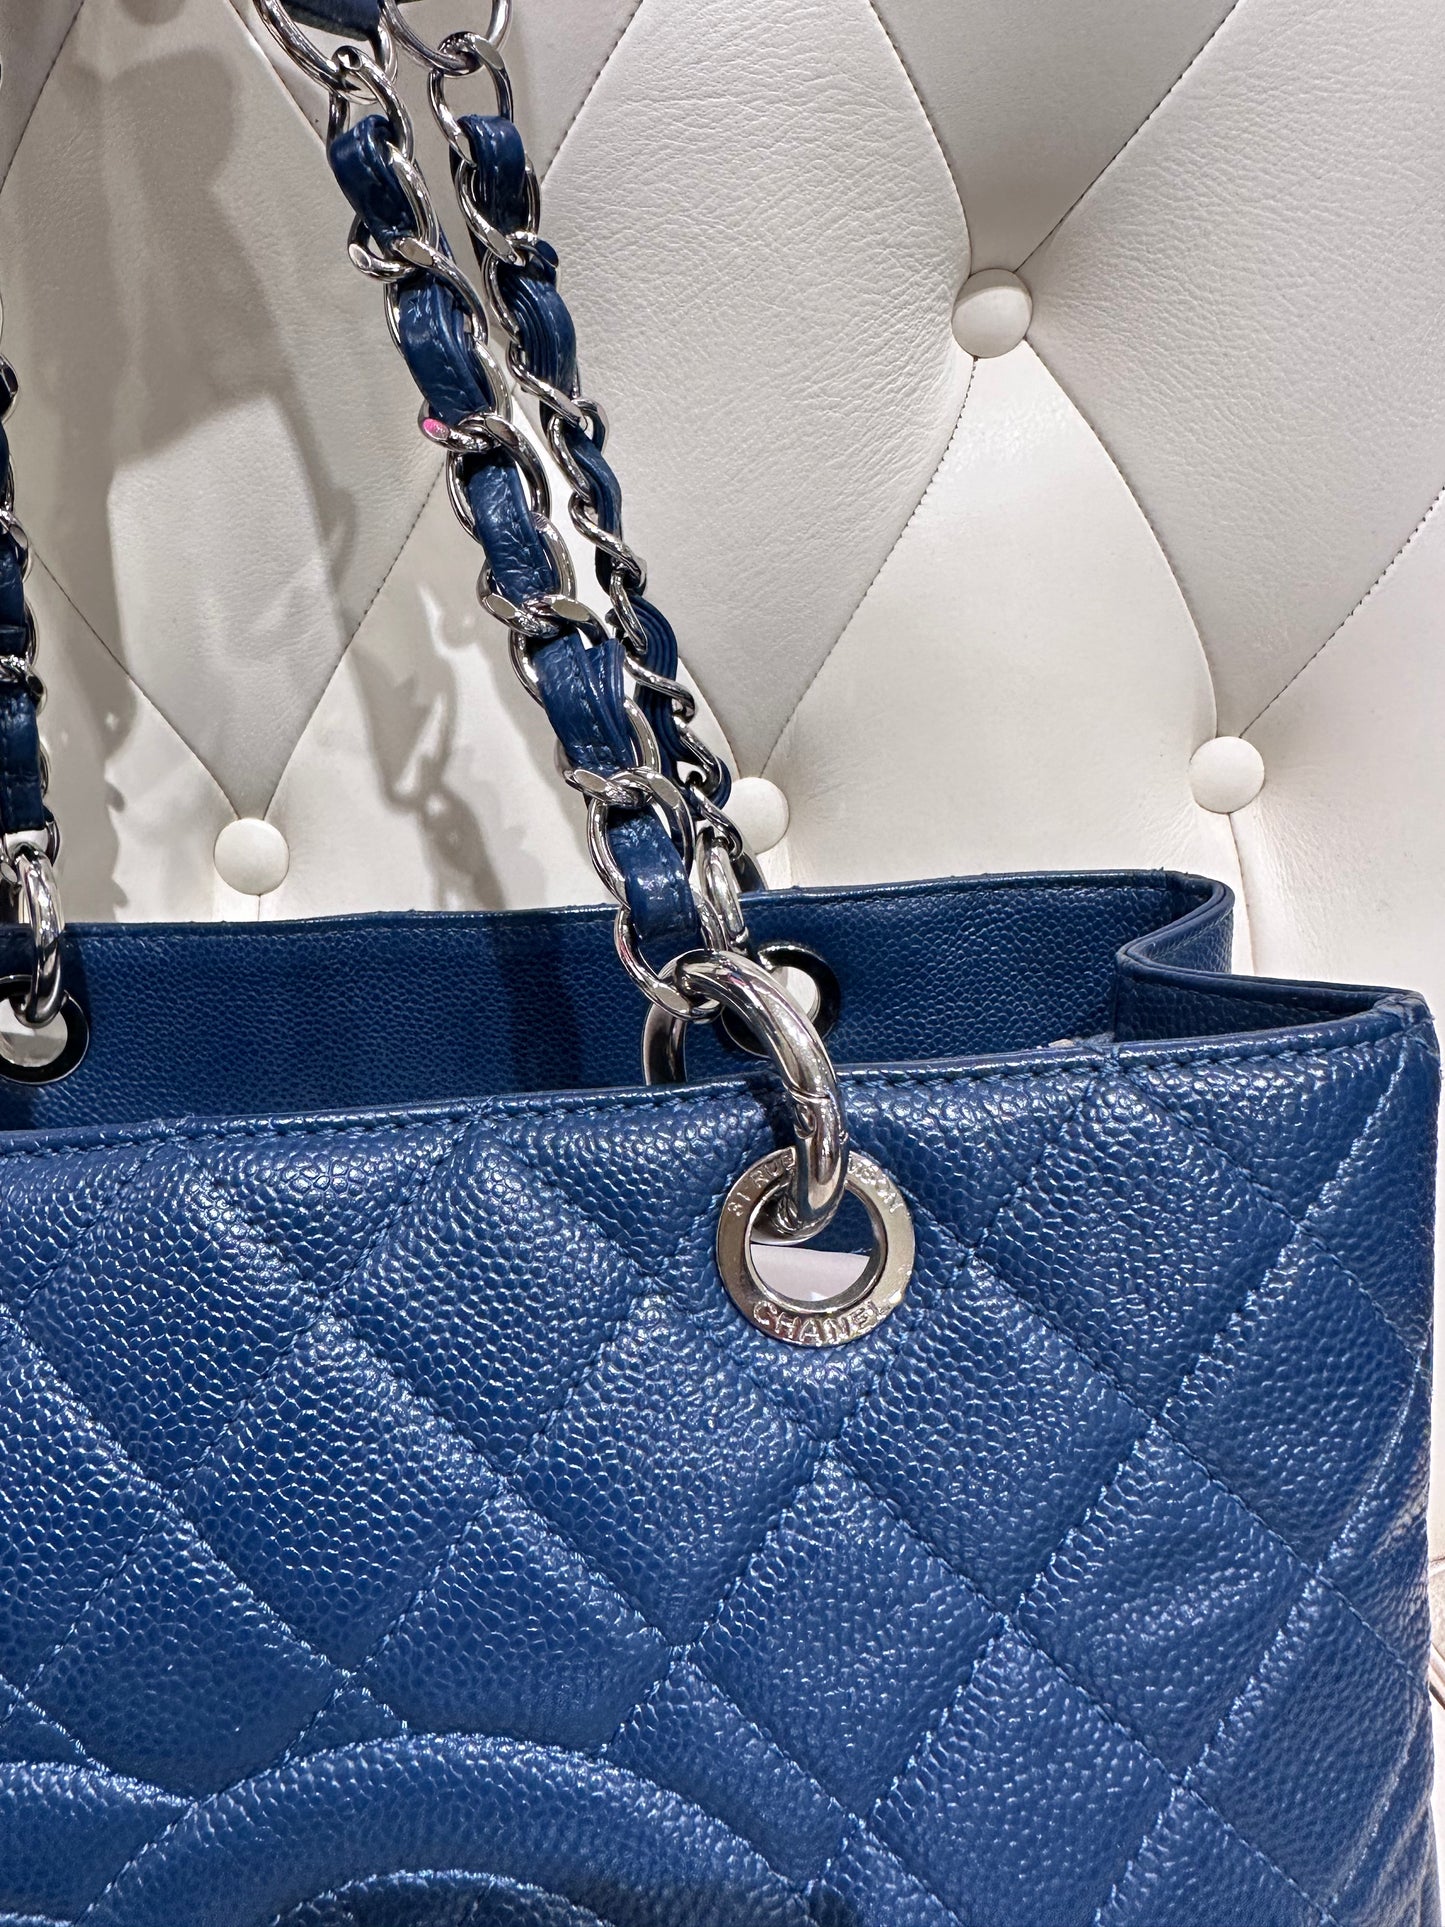 Chanel borsa shopping Gst pelle azzurra